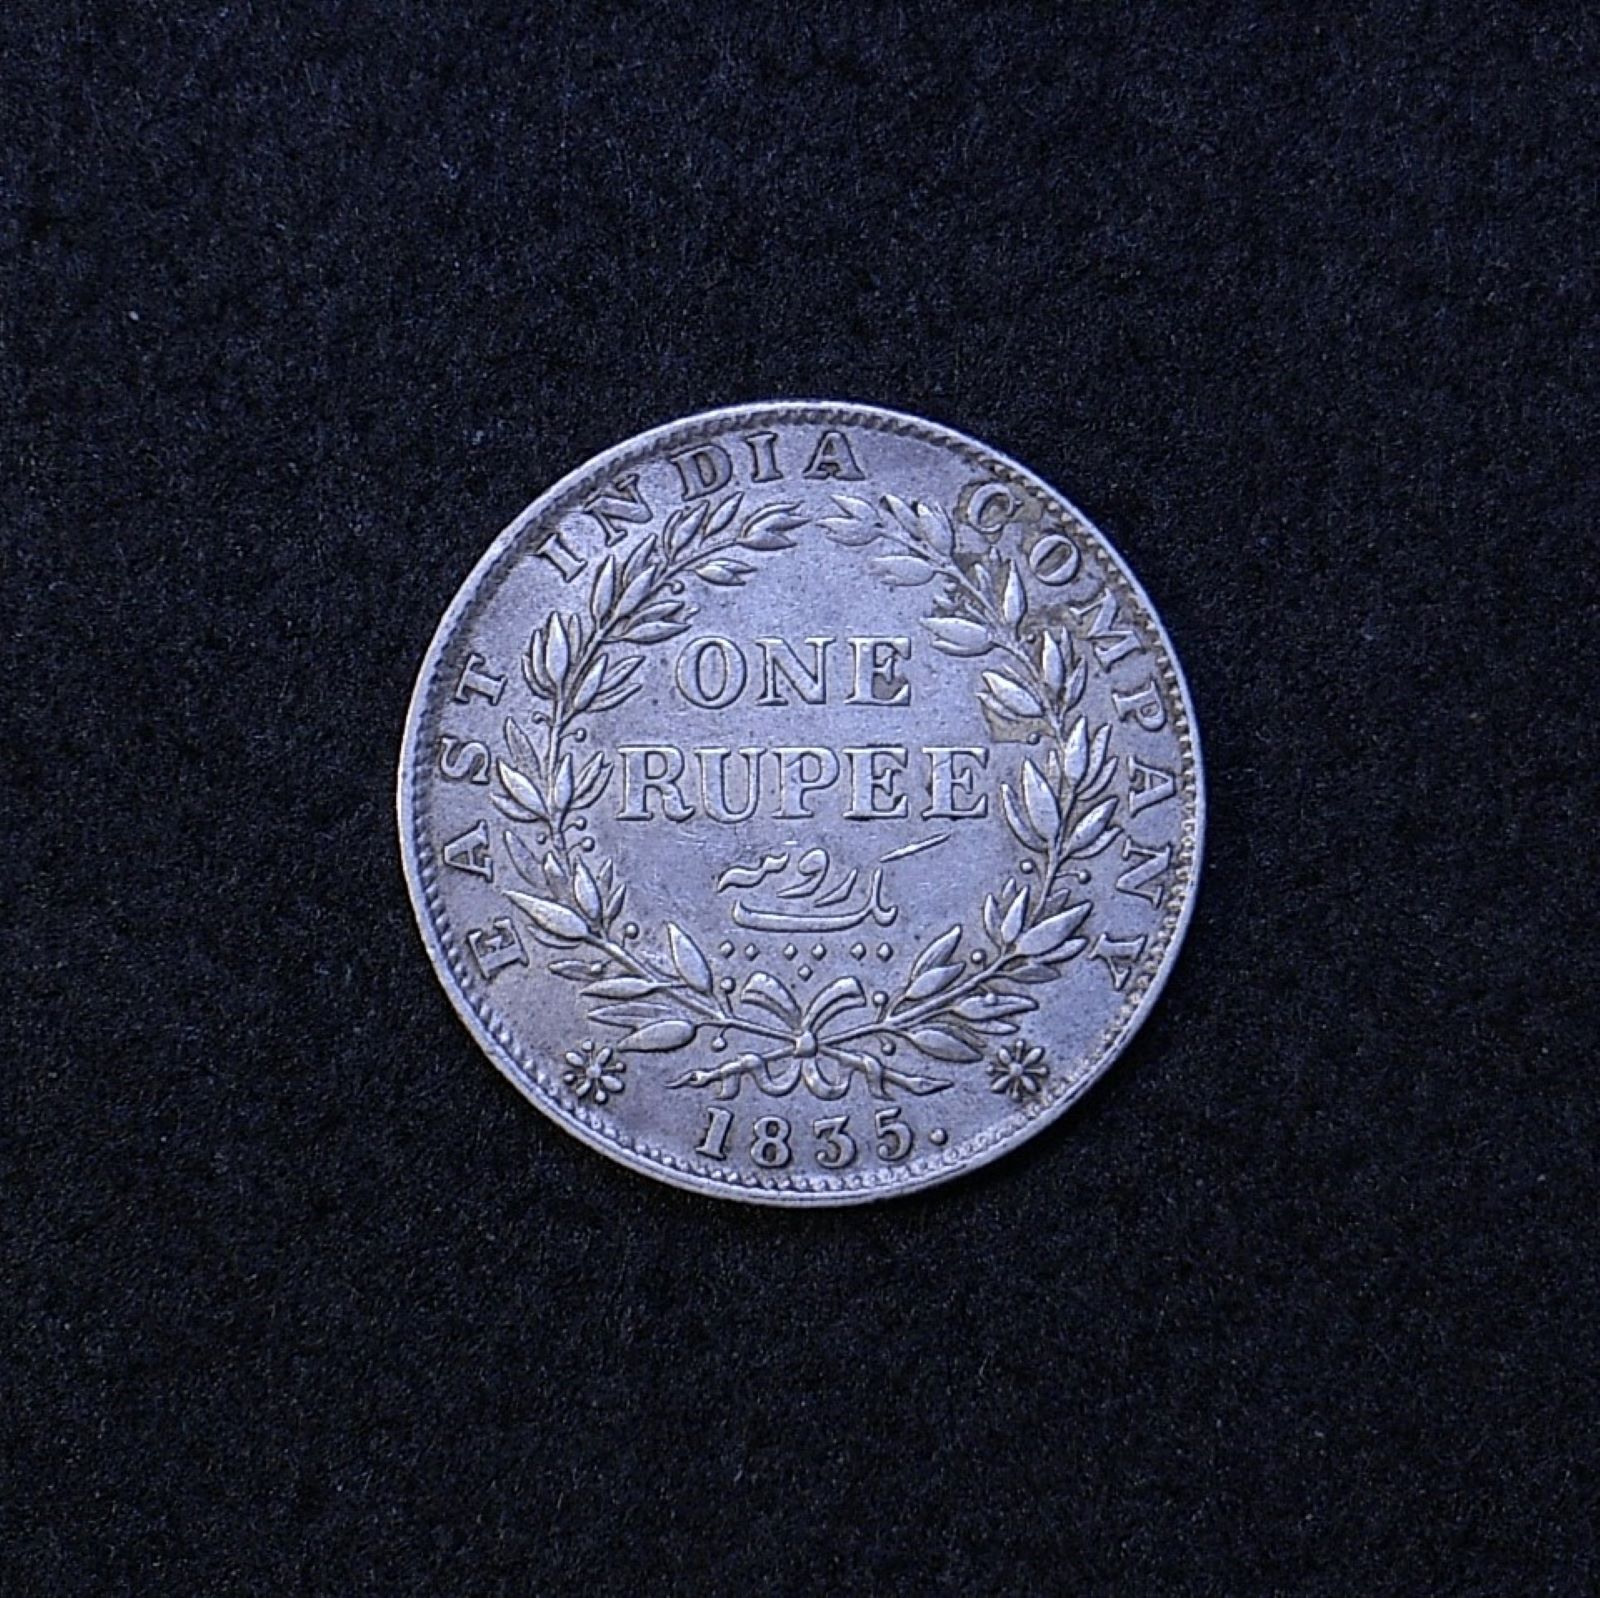 East India Co Rupee 1835 reverse